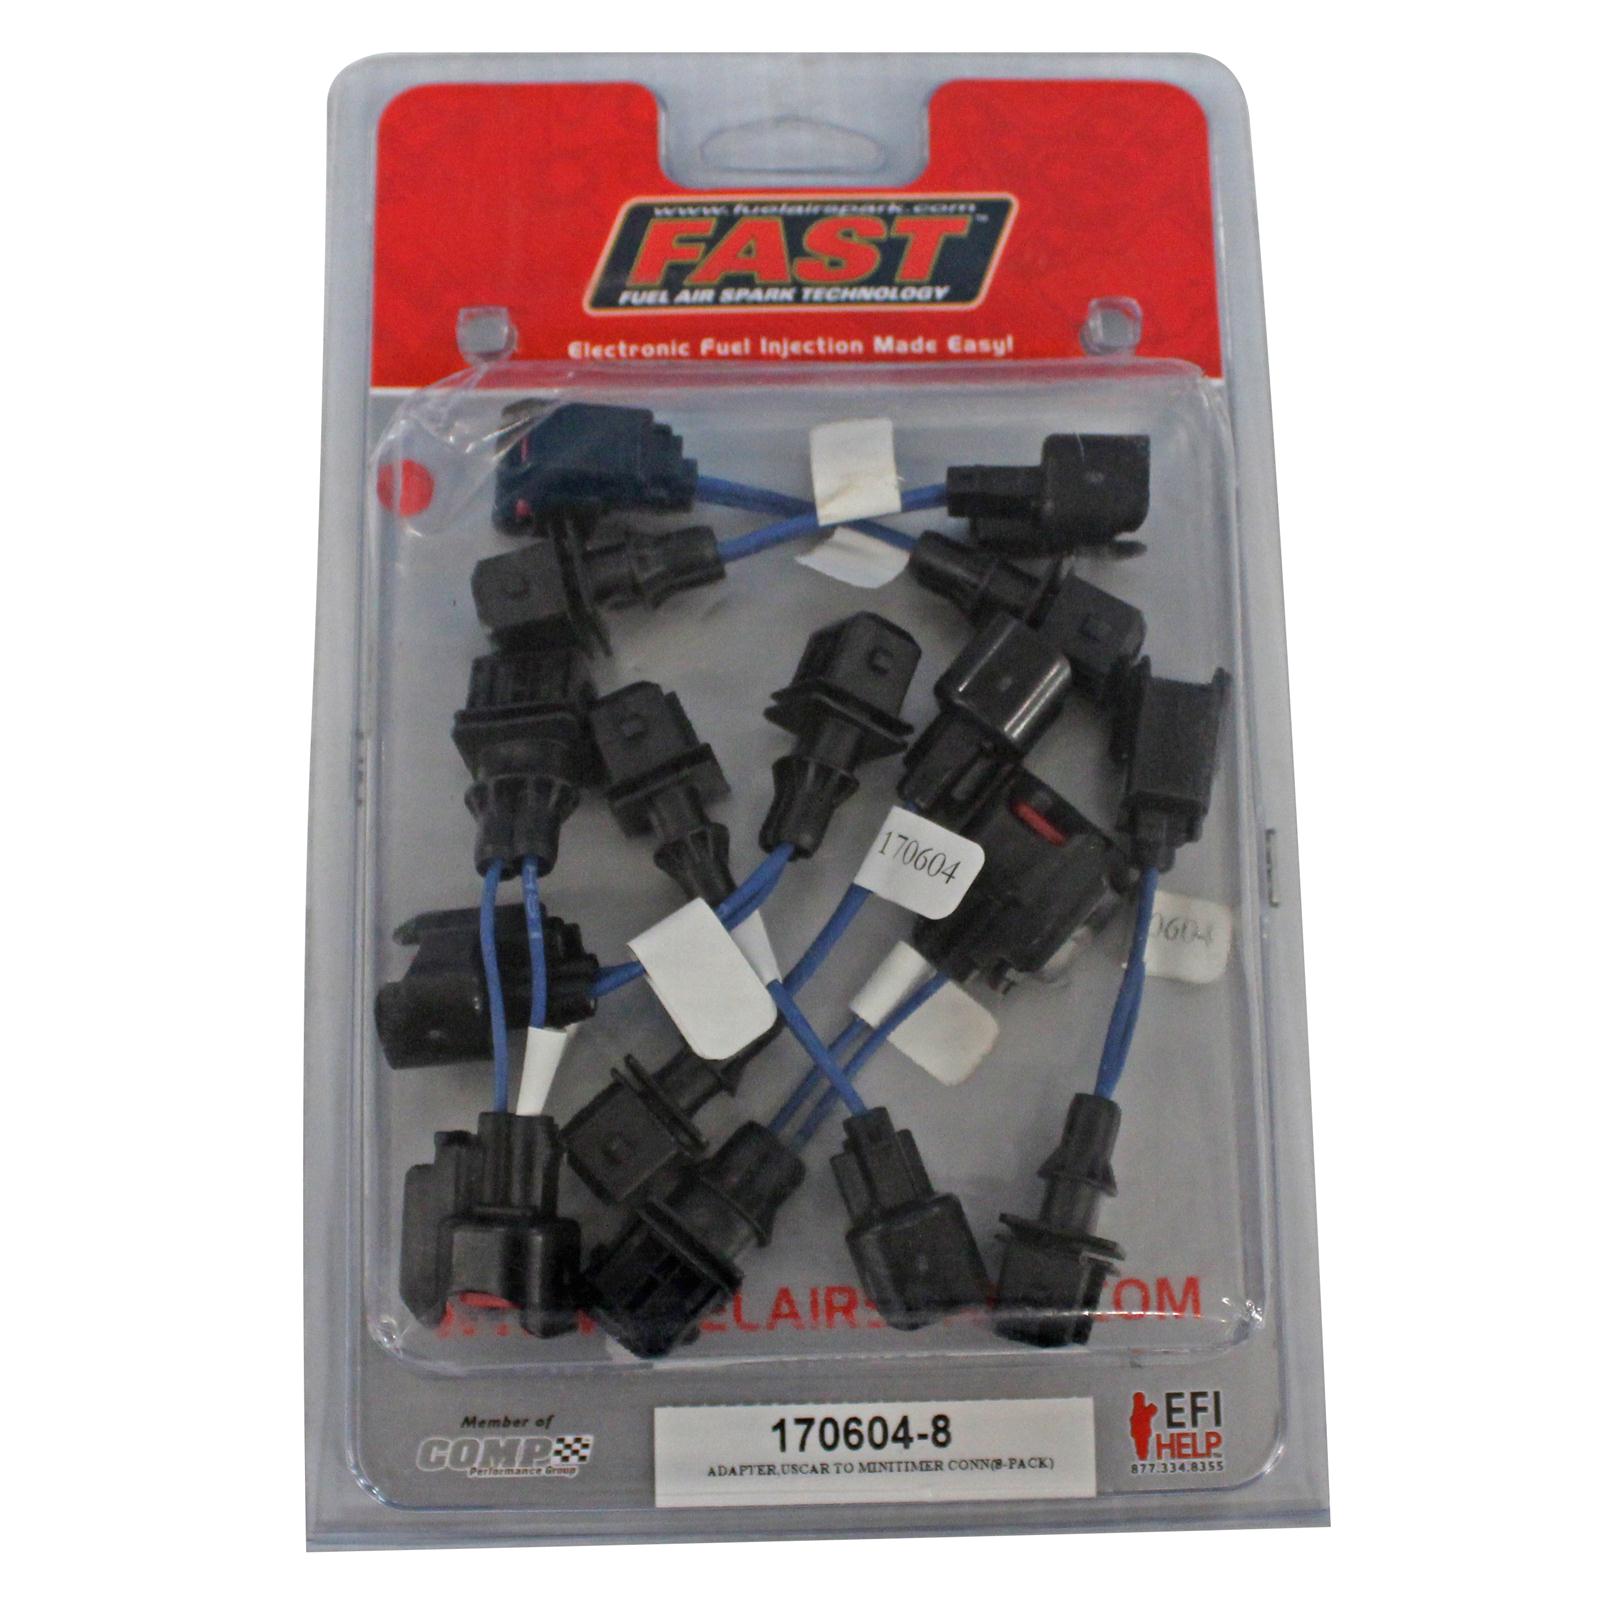 FAST Fuel Injector Adapter Harness (EV6-EV1-8 Pack)